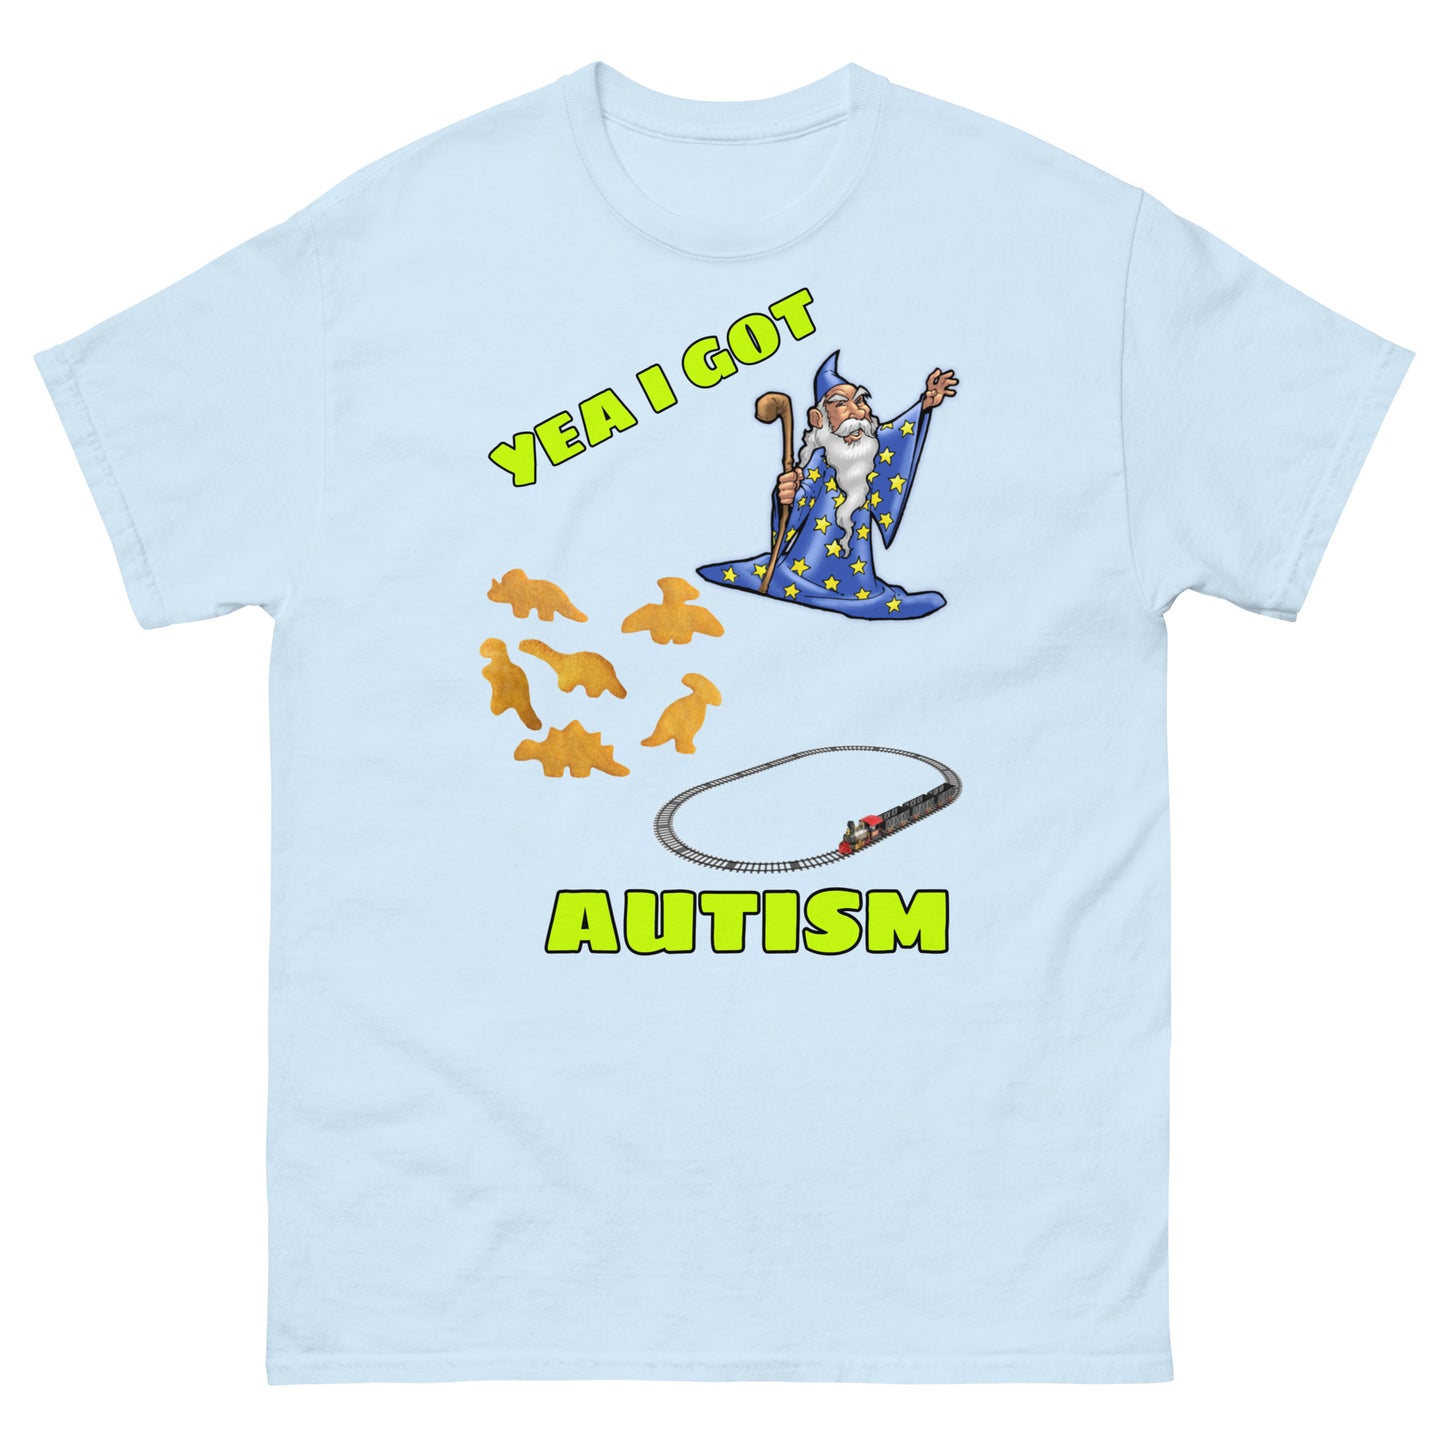 yea I got autism